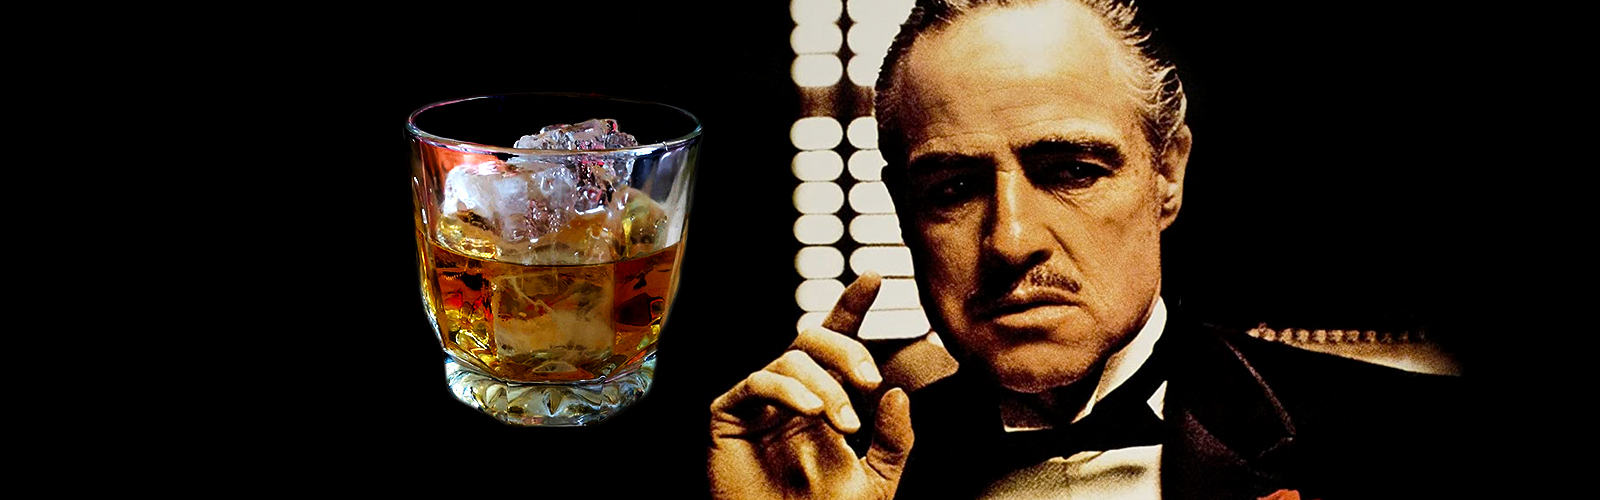 Godfather Cocktail